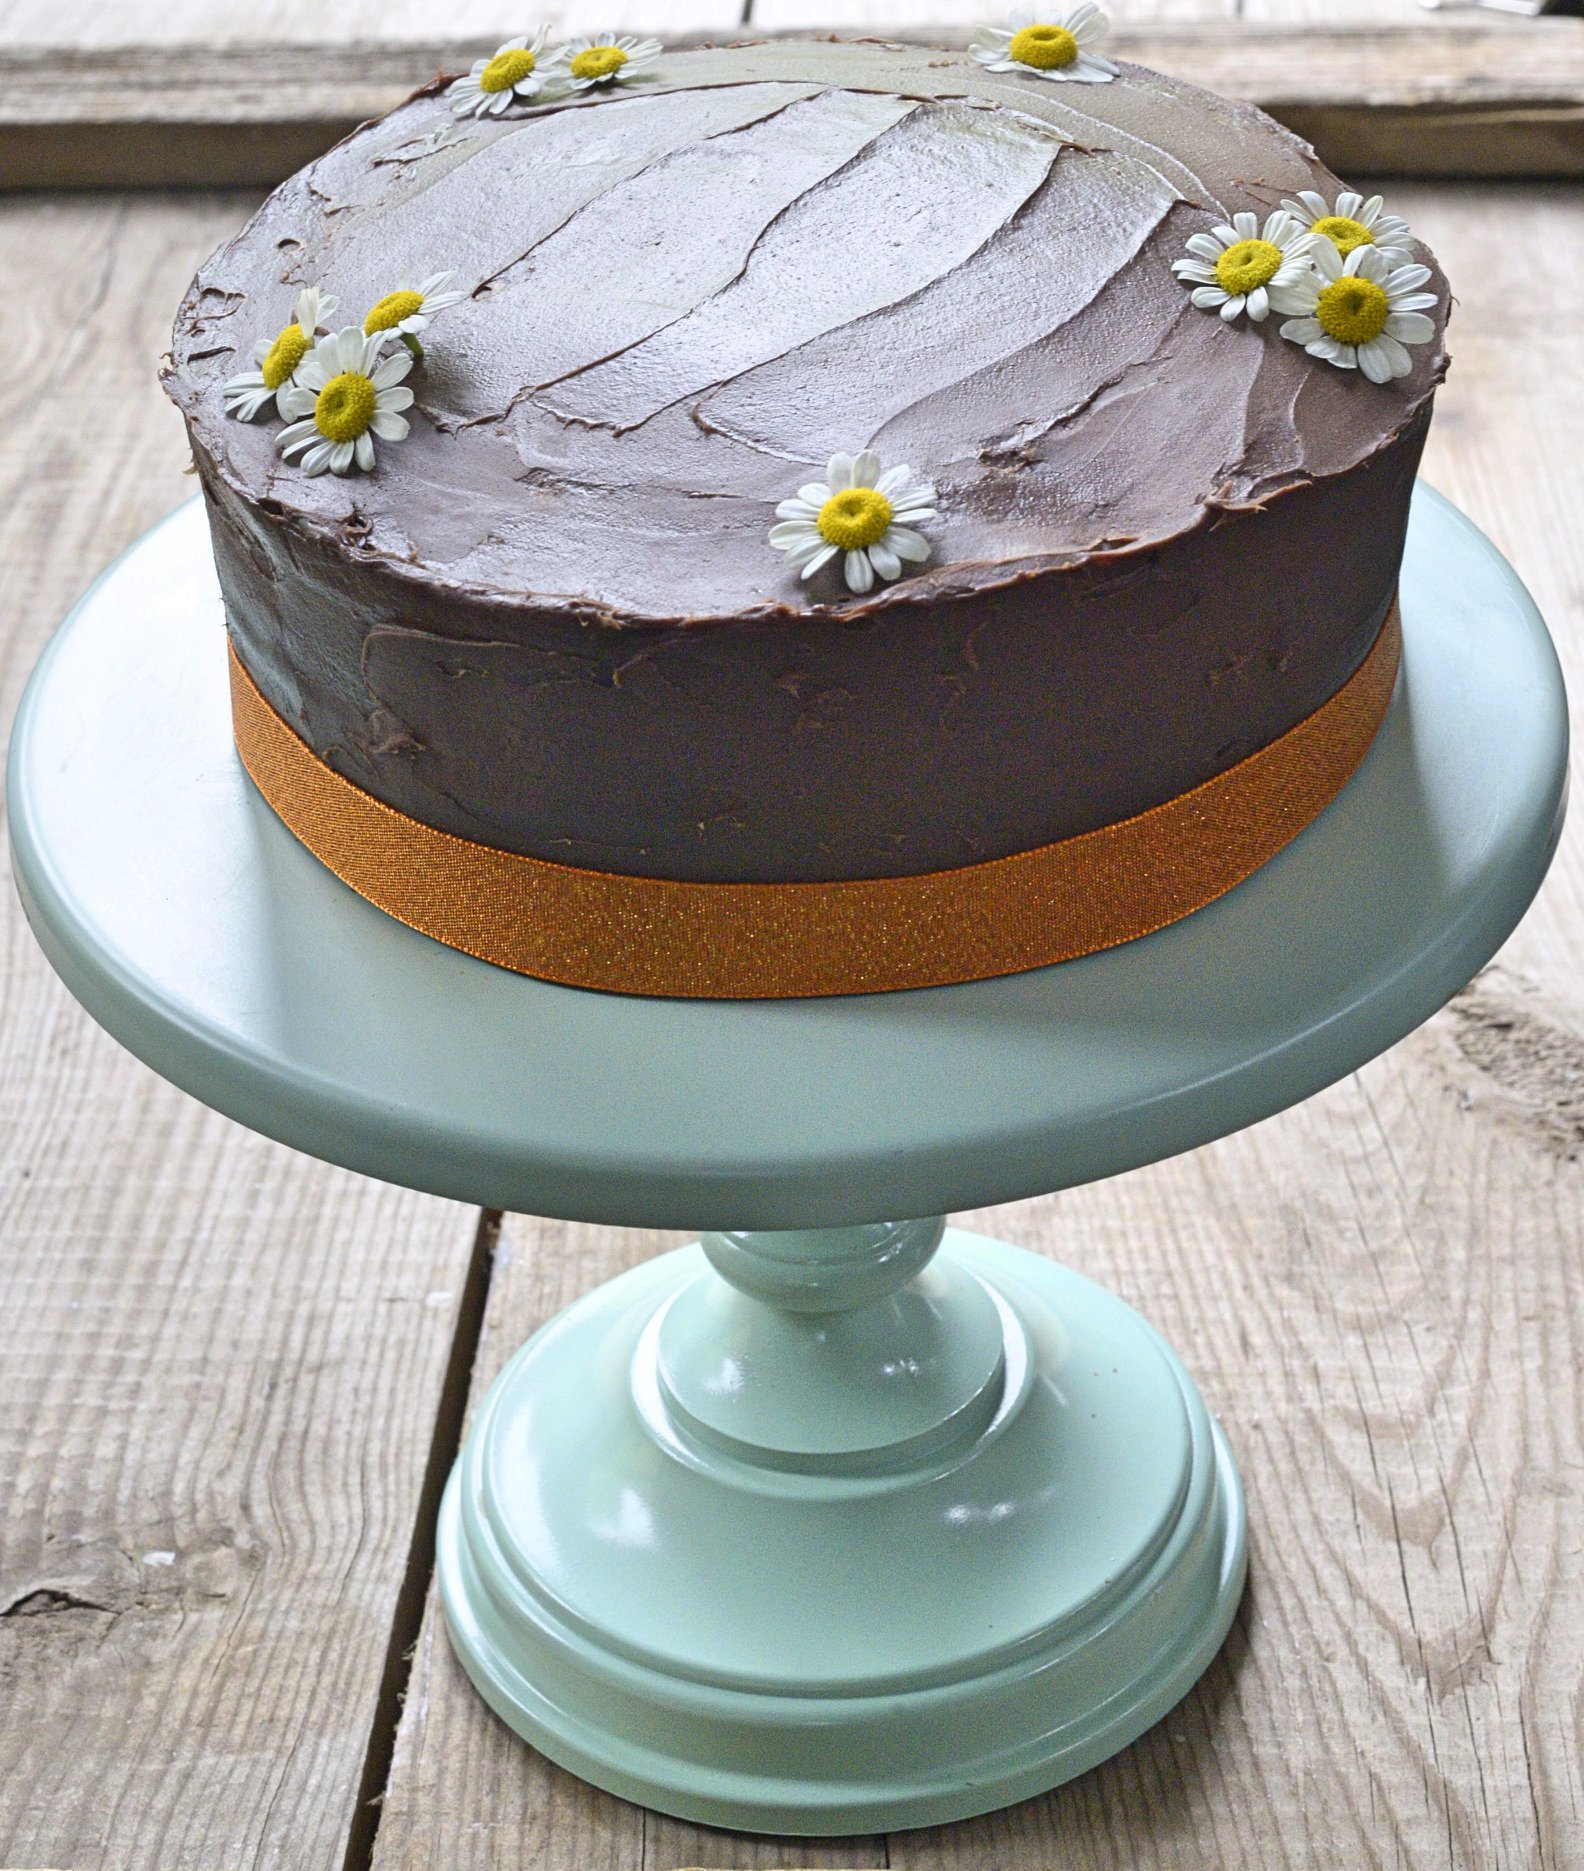 Chocolate Zucchini Cake Healthy Dessert Idea